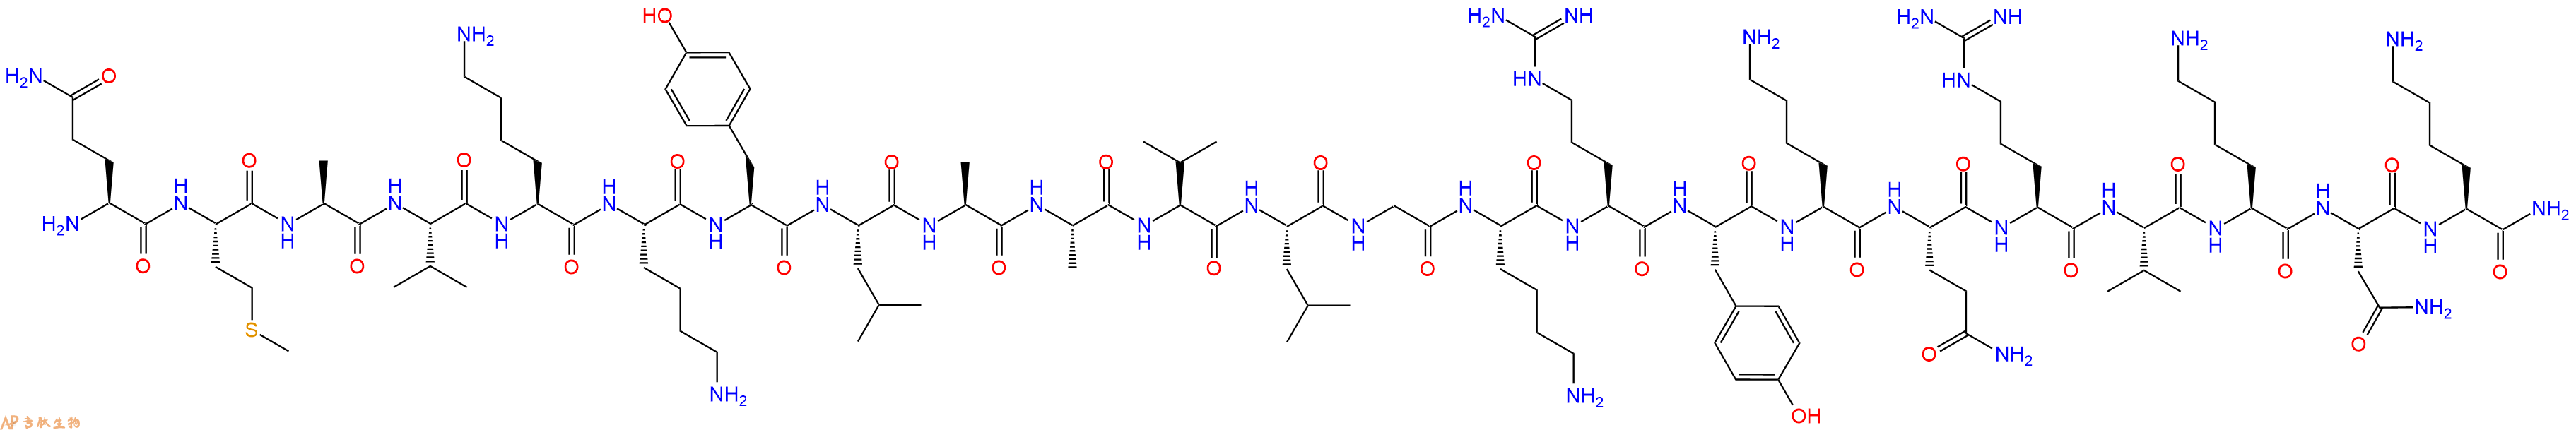 专肽生物产品PACAP-38 (16-38) (human, chicken, mouse, ovine, porcine, rat)144025-82-1